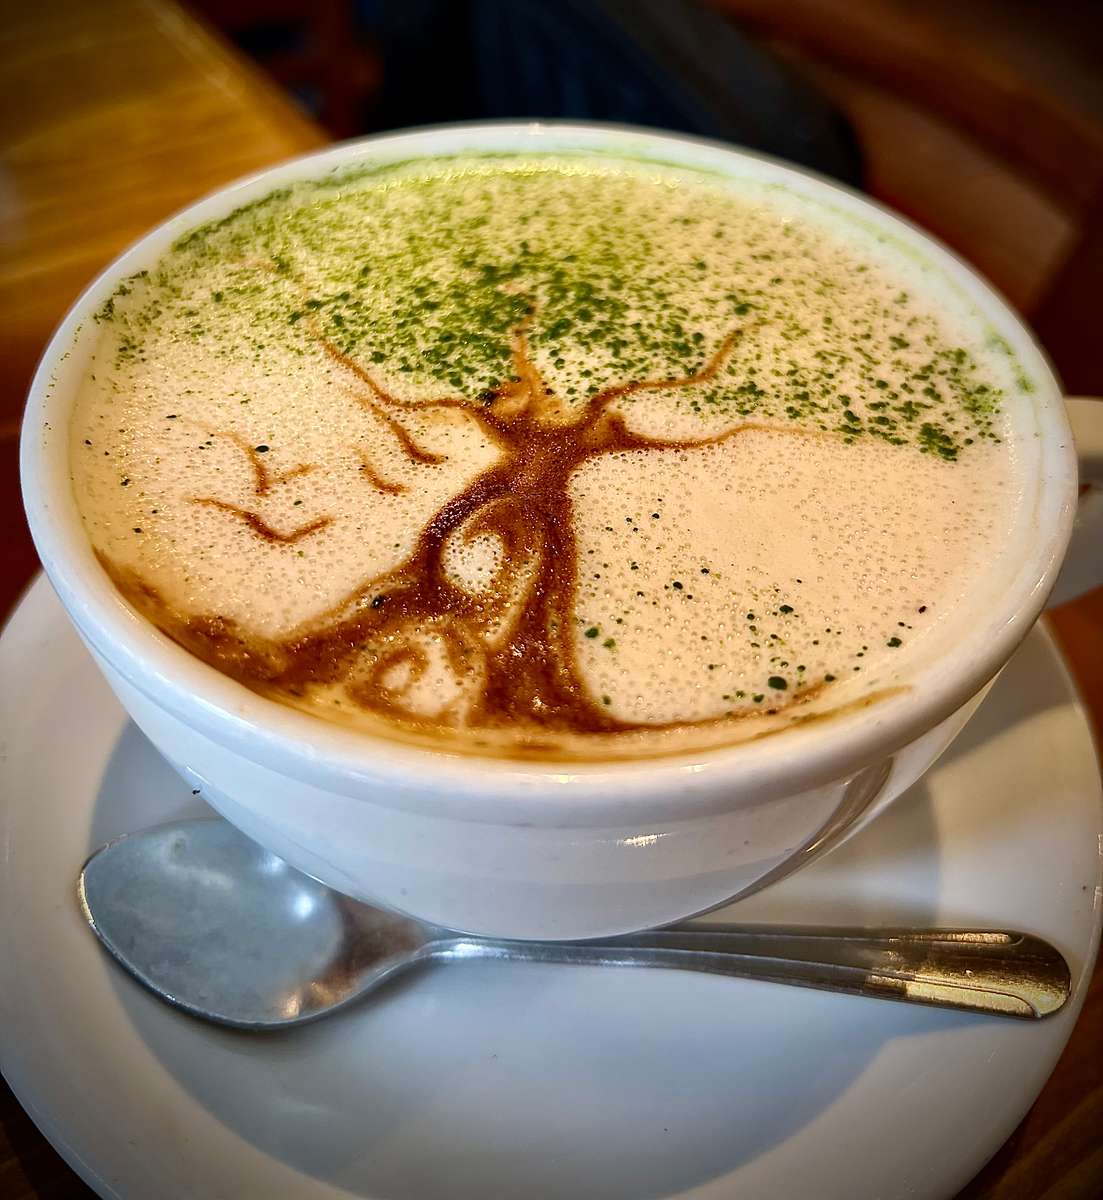 Caffe Pistachio Latte with beautiful latte art of "Tree of Life" or pistachio tree